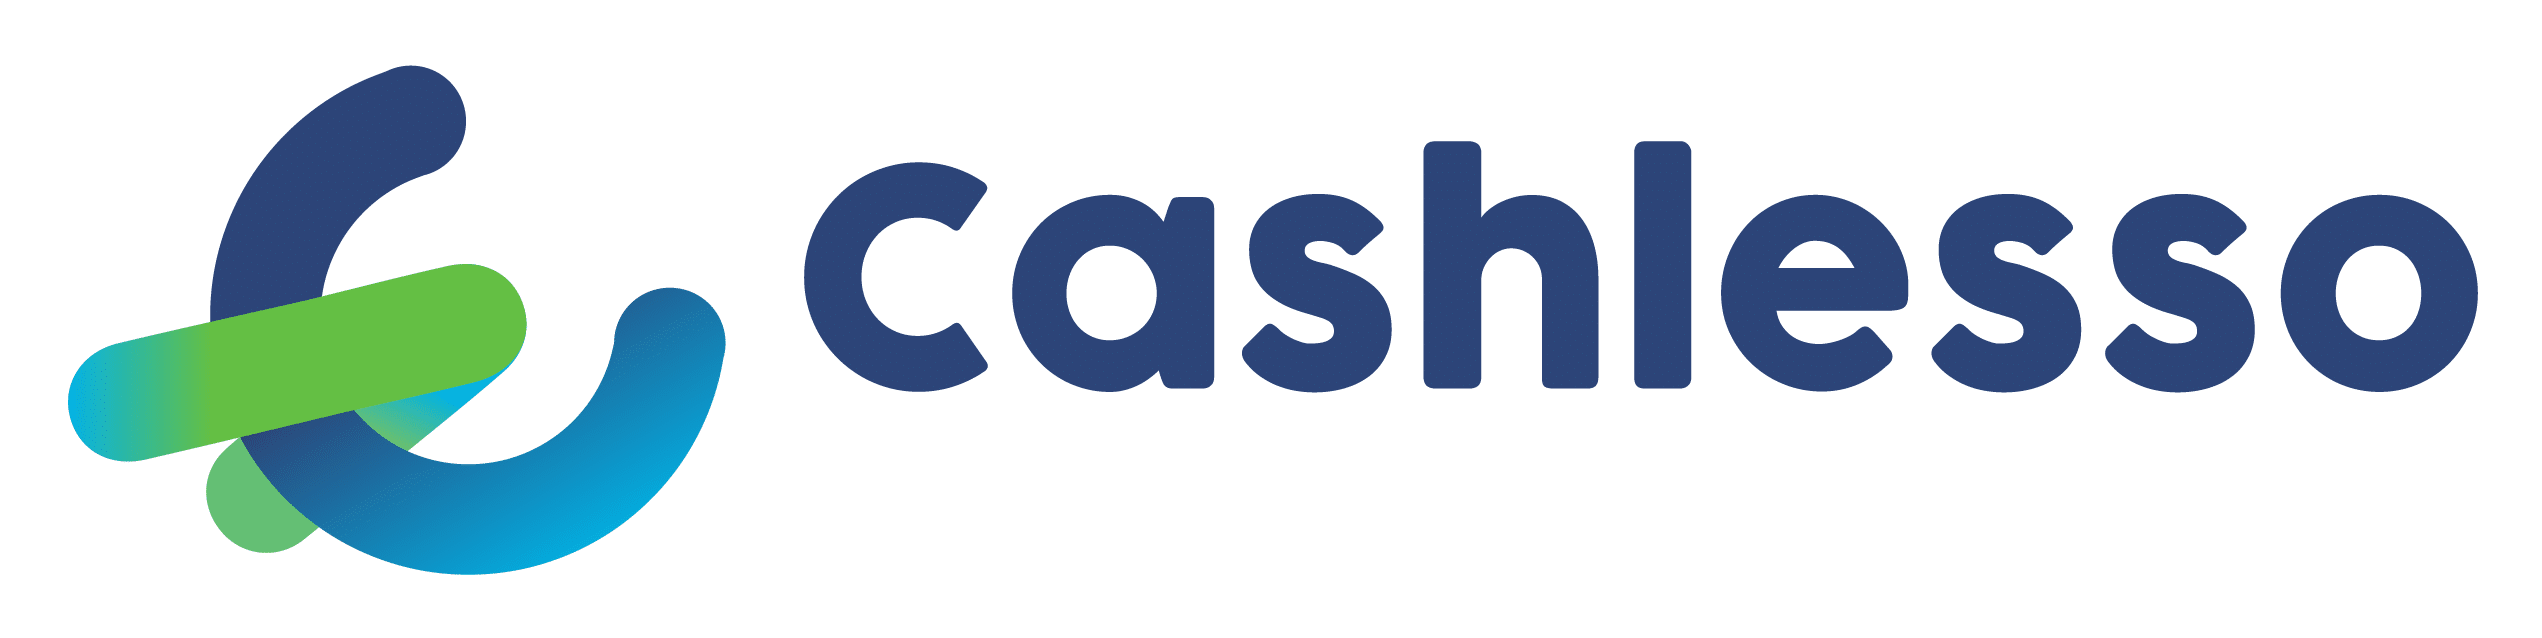 cashlesso logo